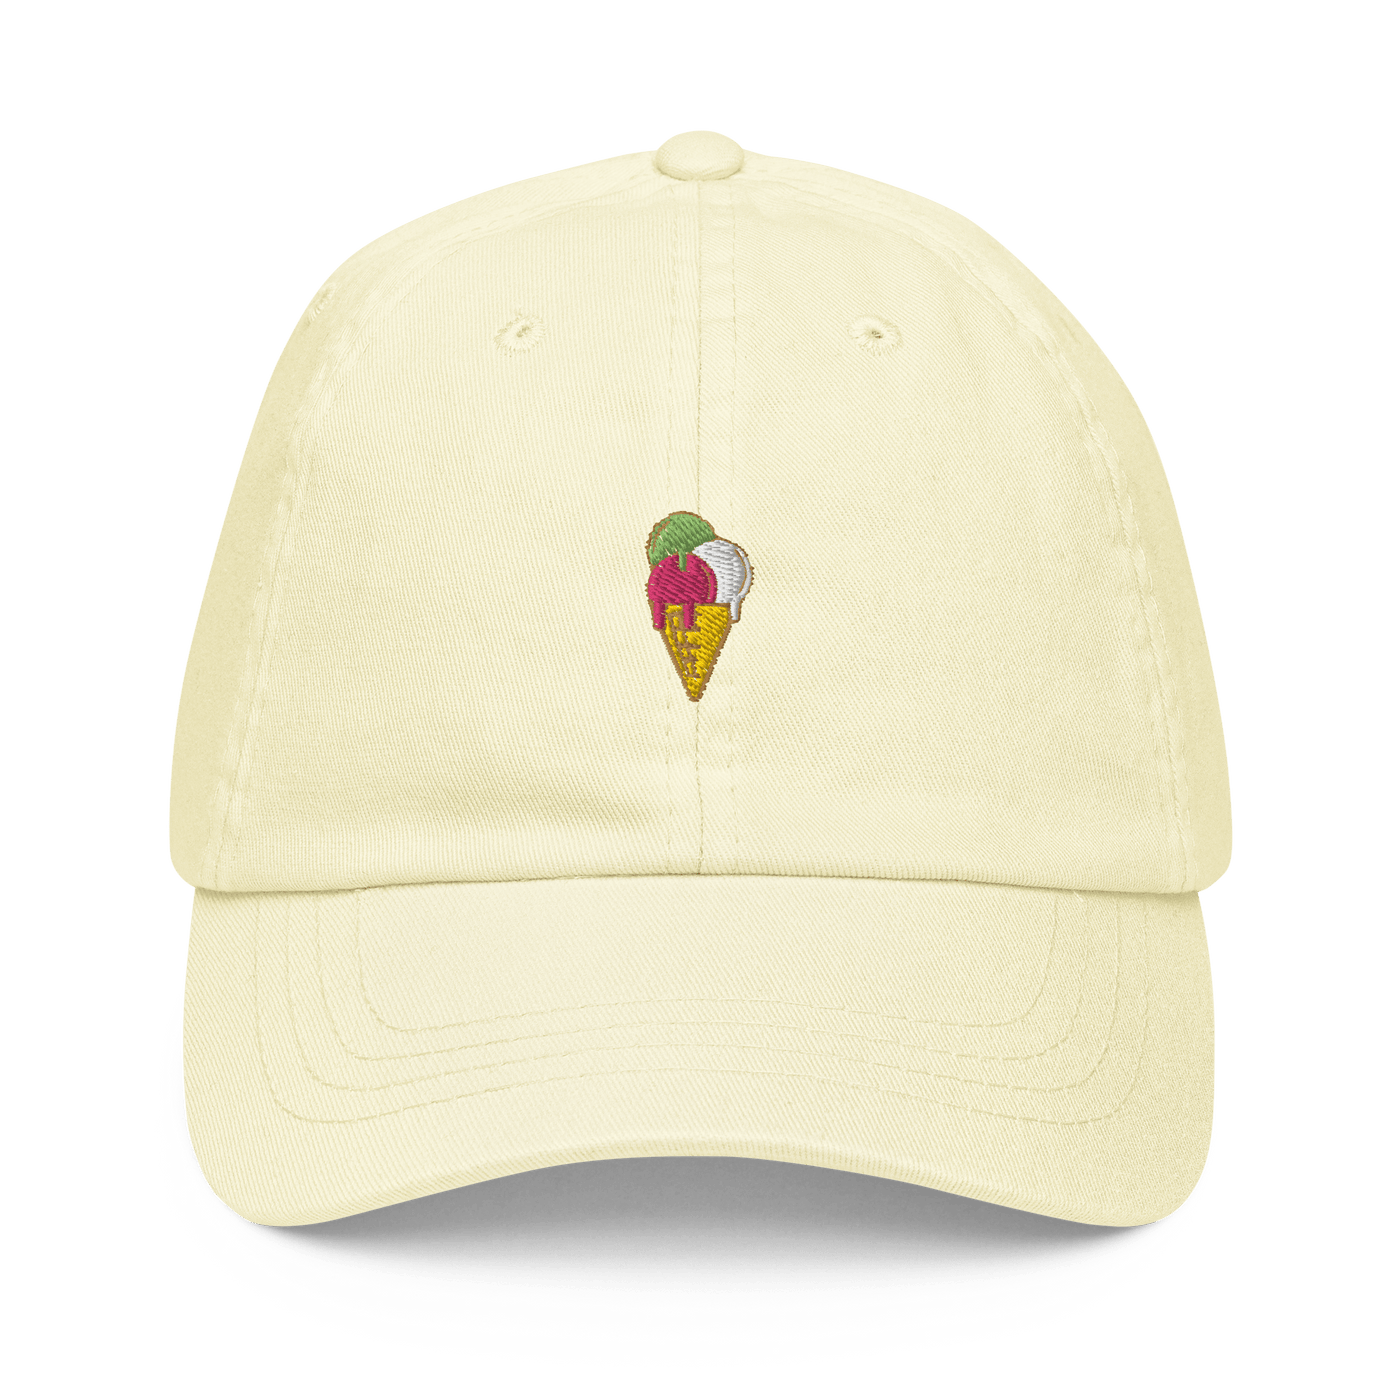 Ice Cream Cone Pastel hat - Pastel Lemon - - Just Another Cap Store